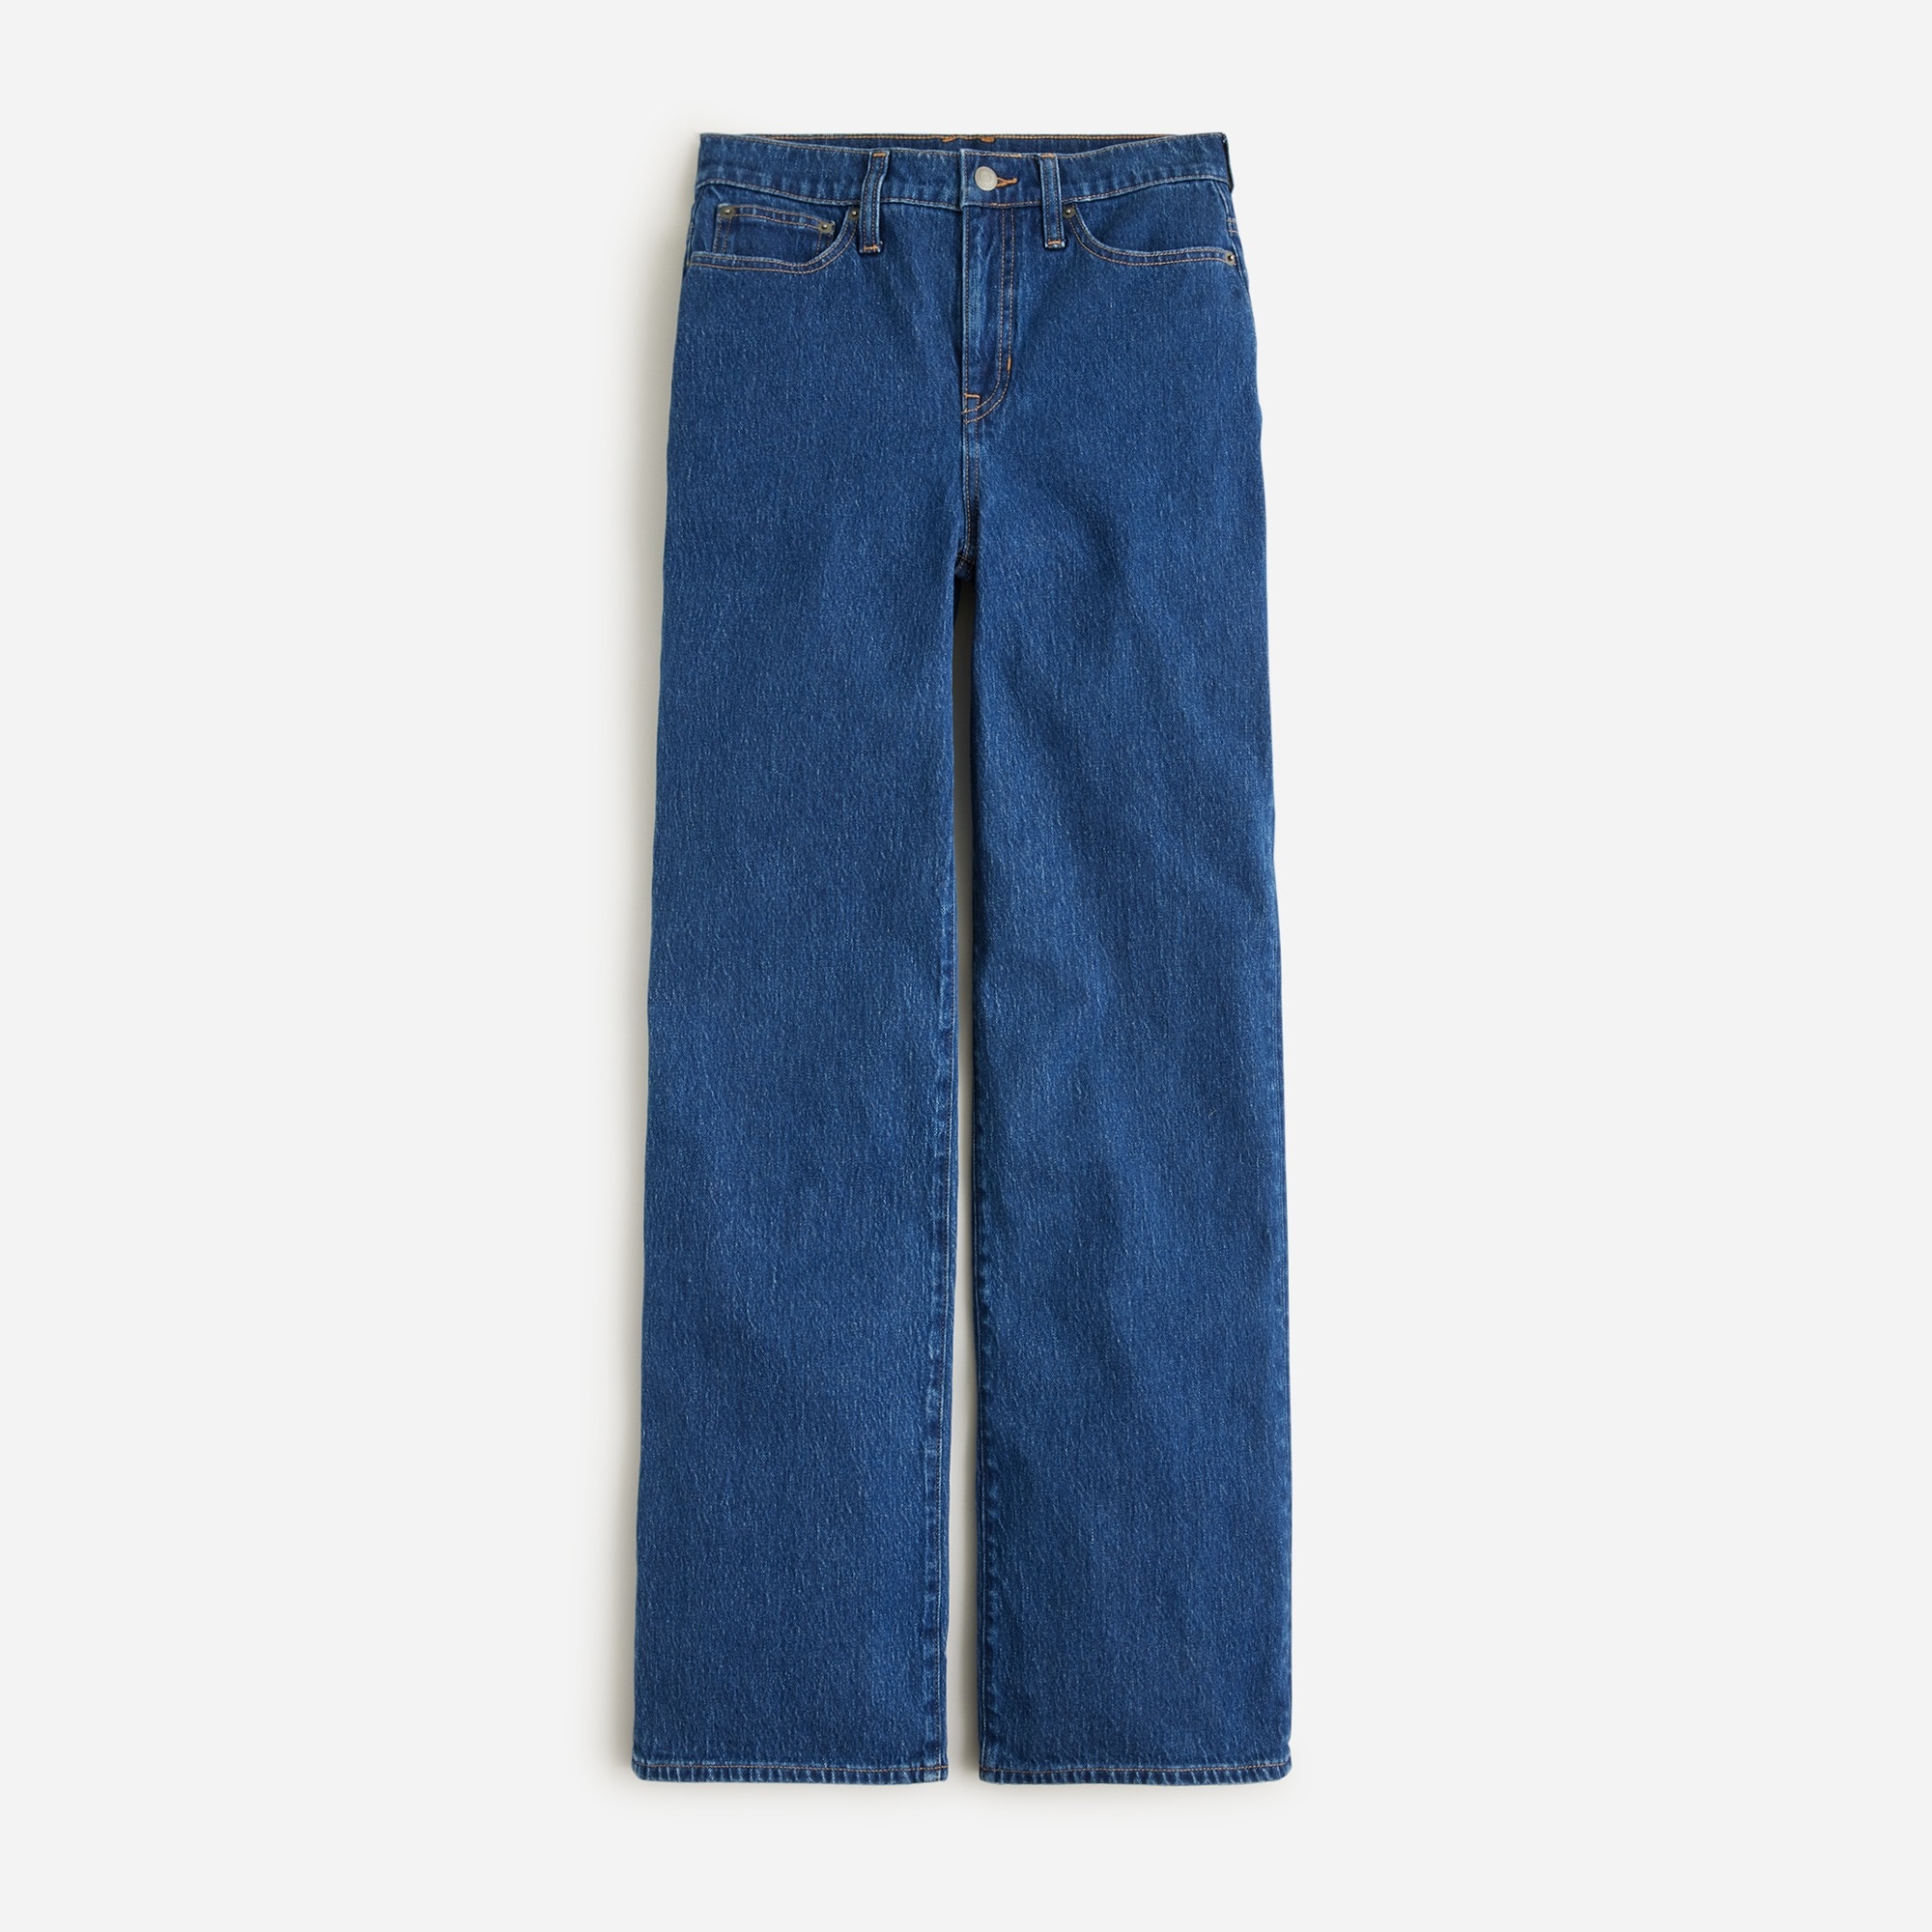  Tall full-length slim wide-leg jean in Brick Lane wash